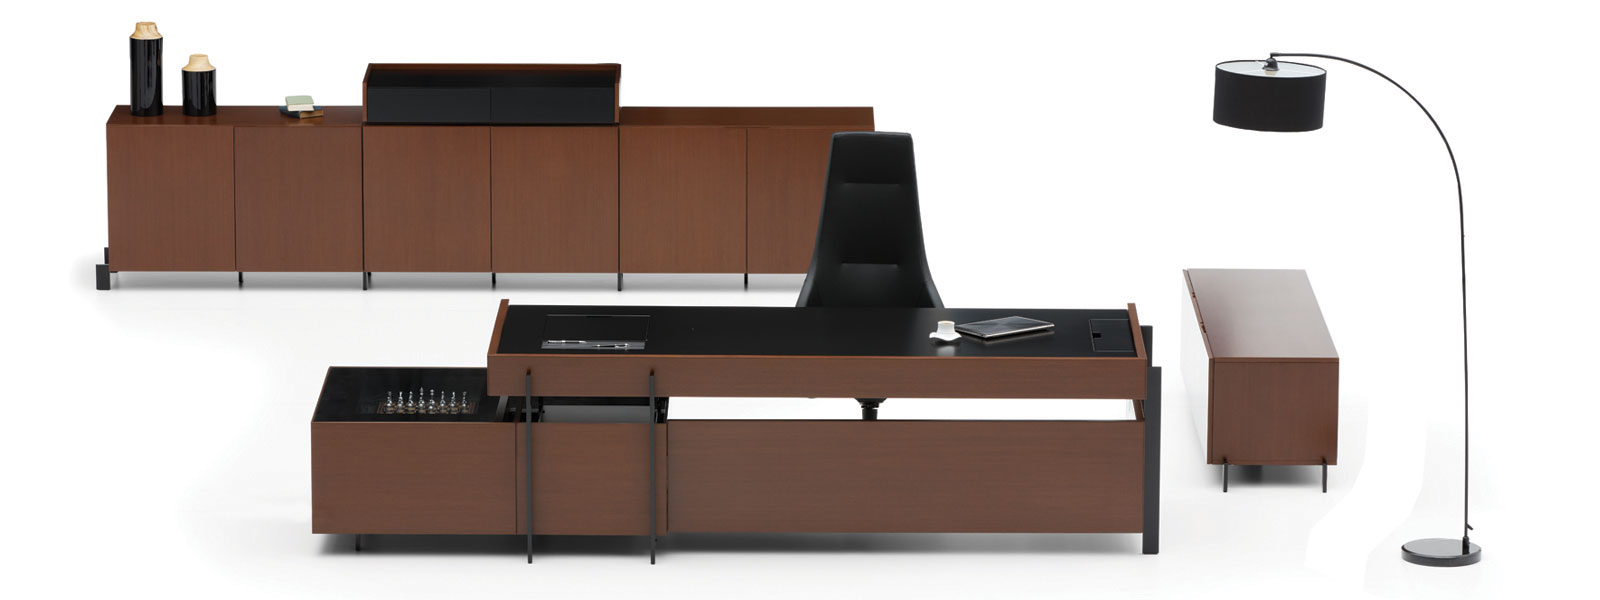 Bürotime modern office furniture